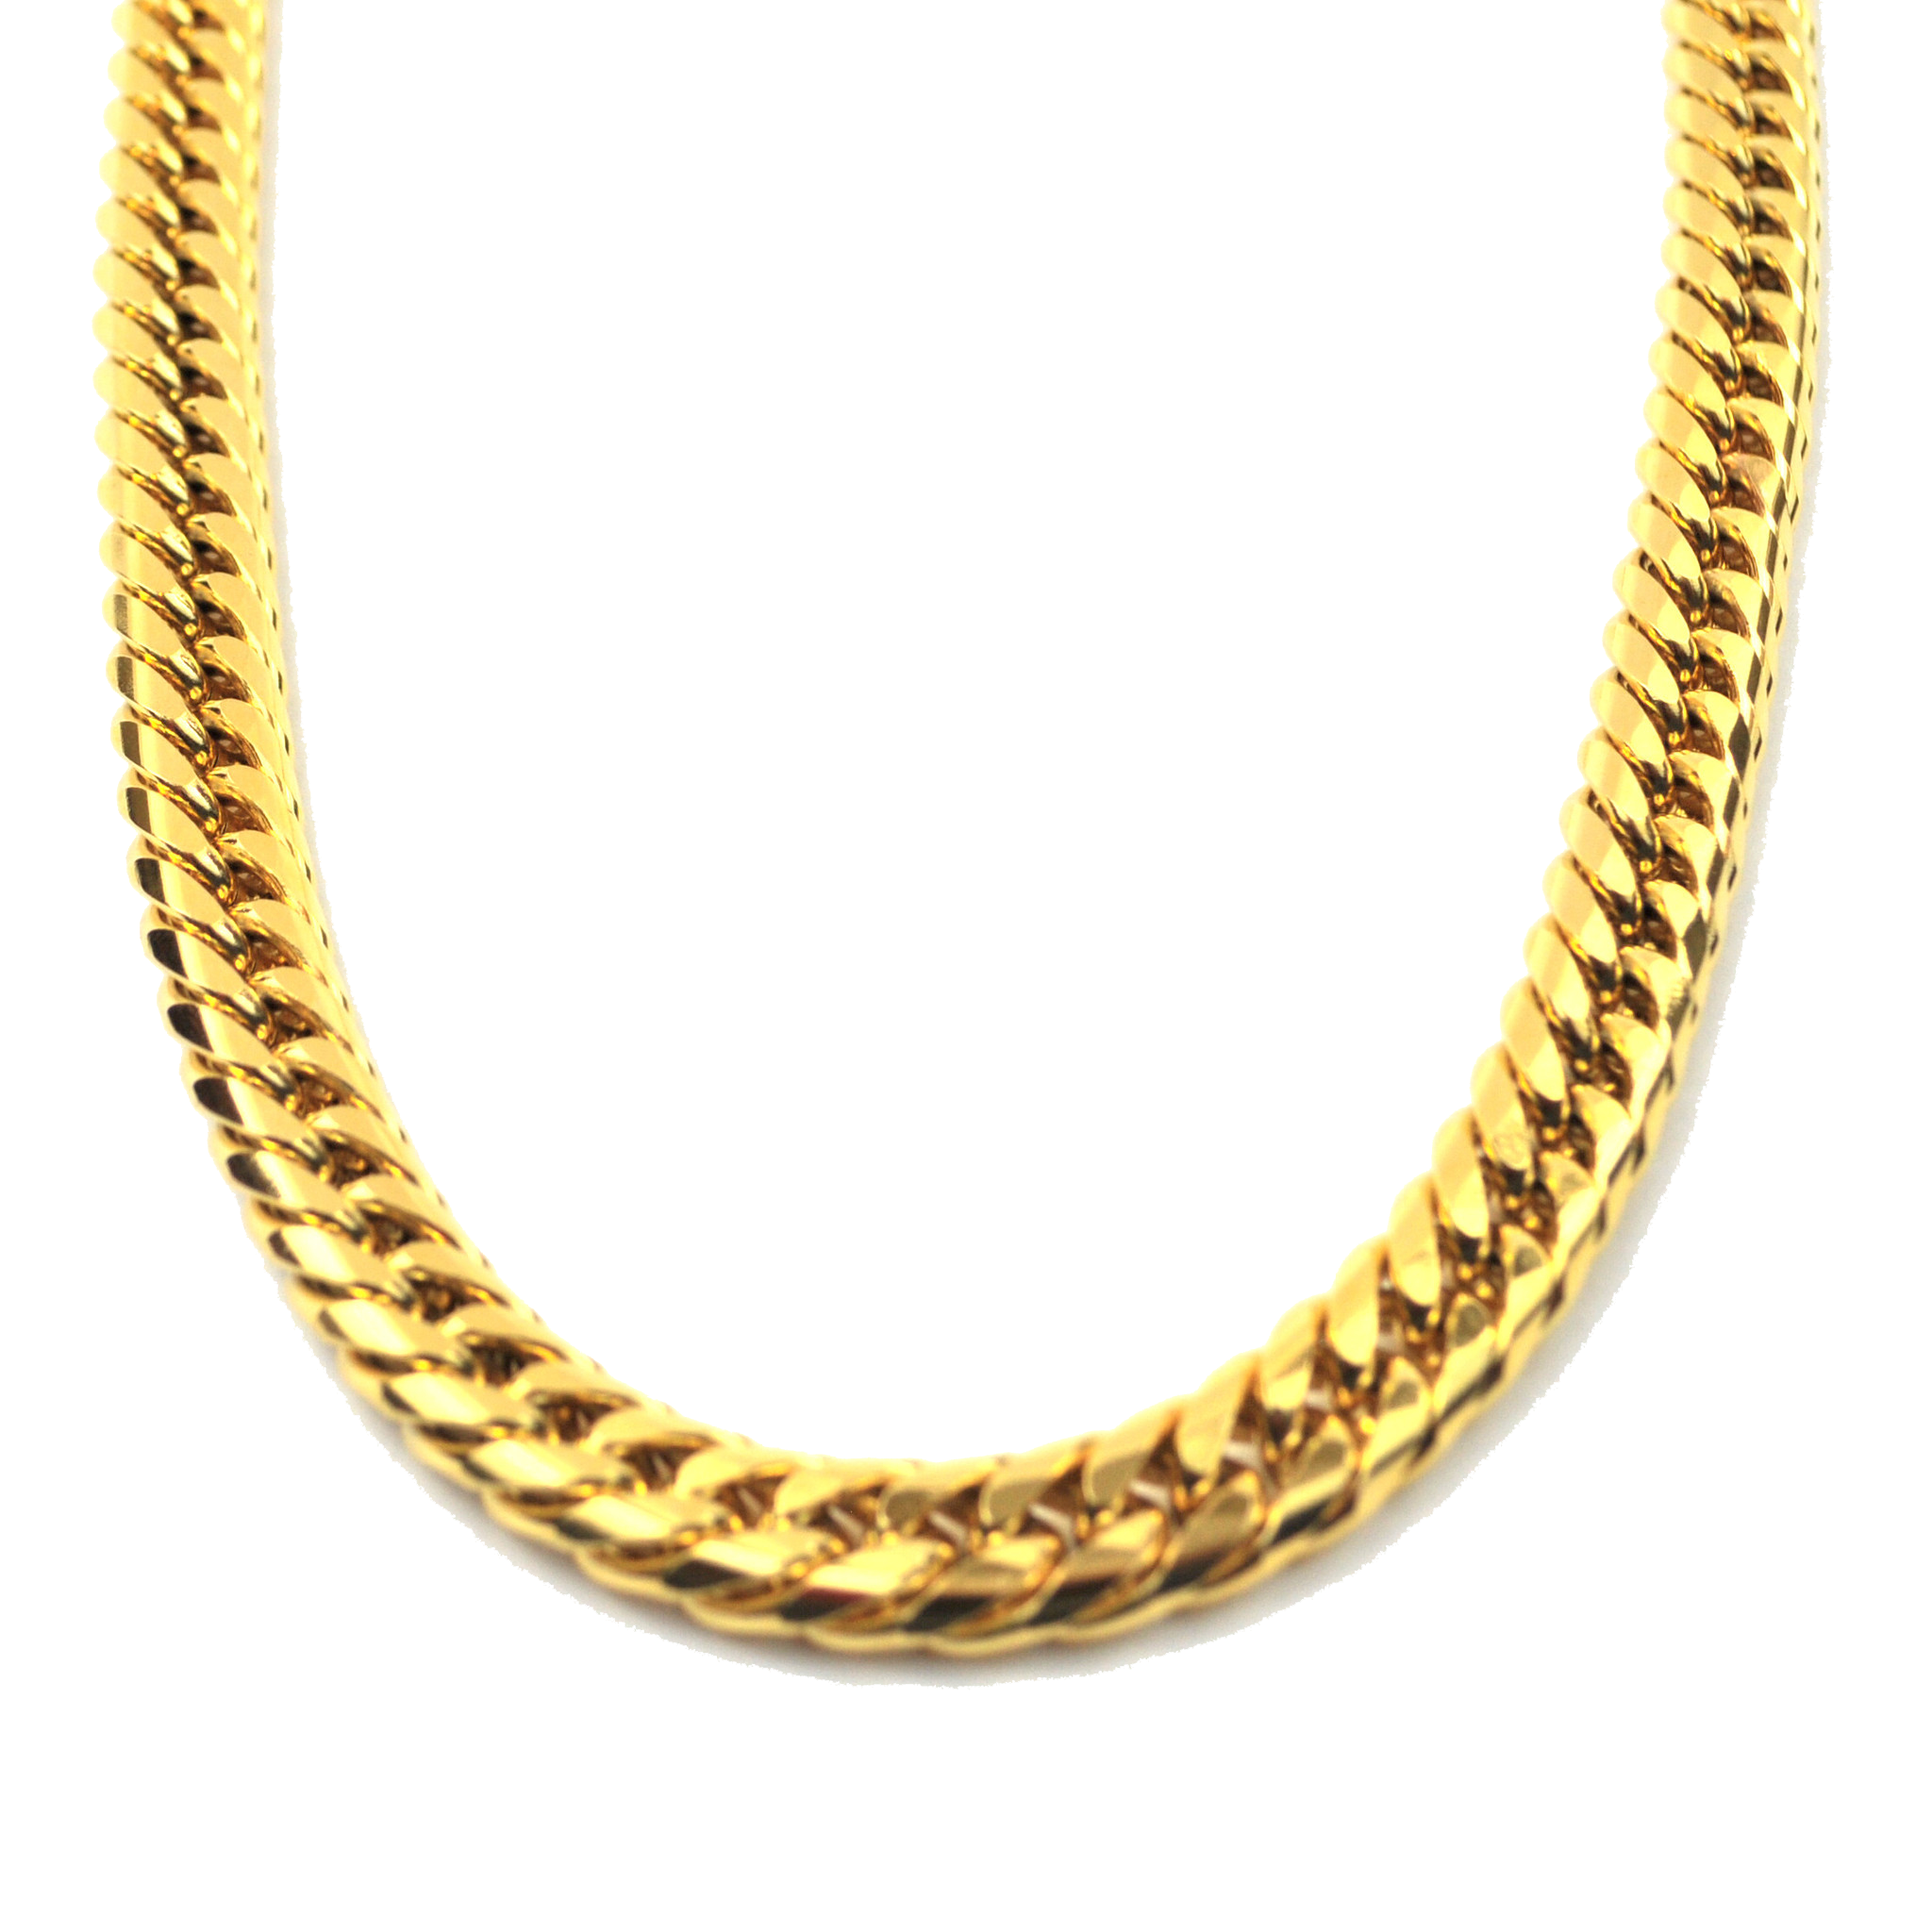 gold jewelry clip art - photo #15